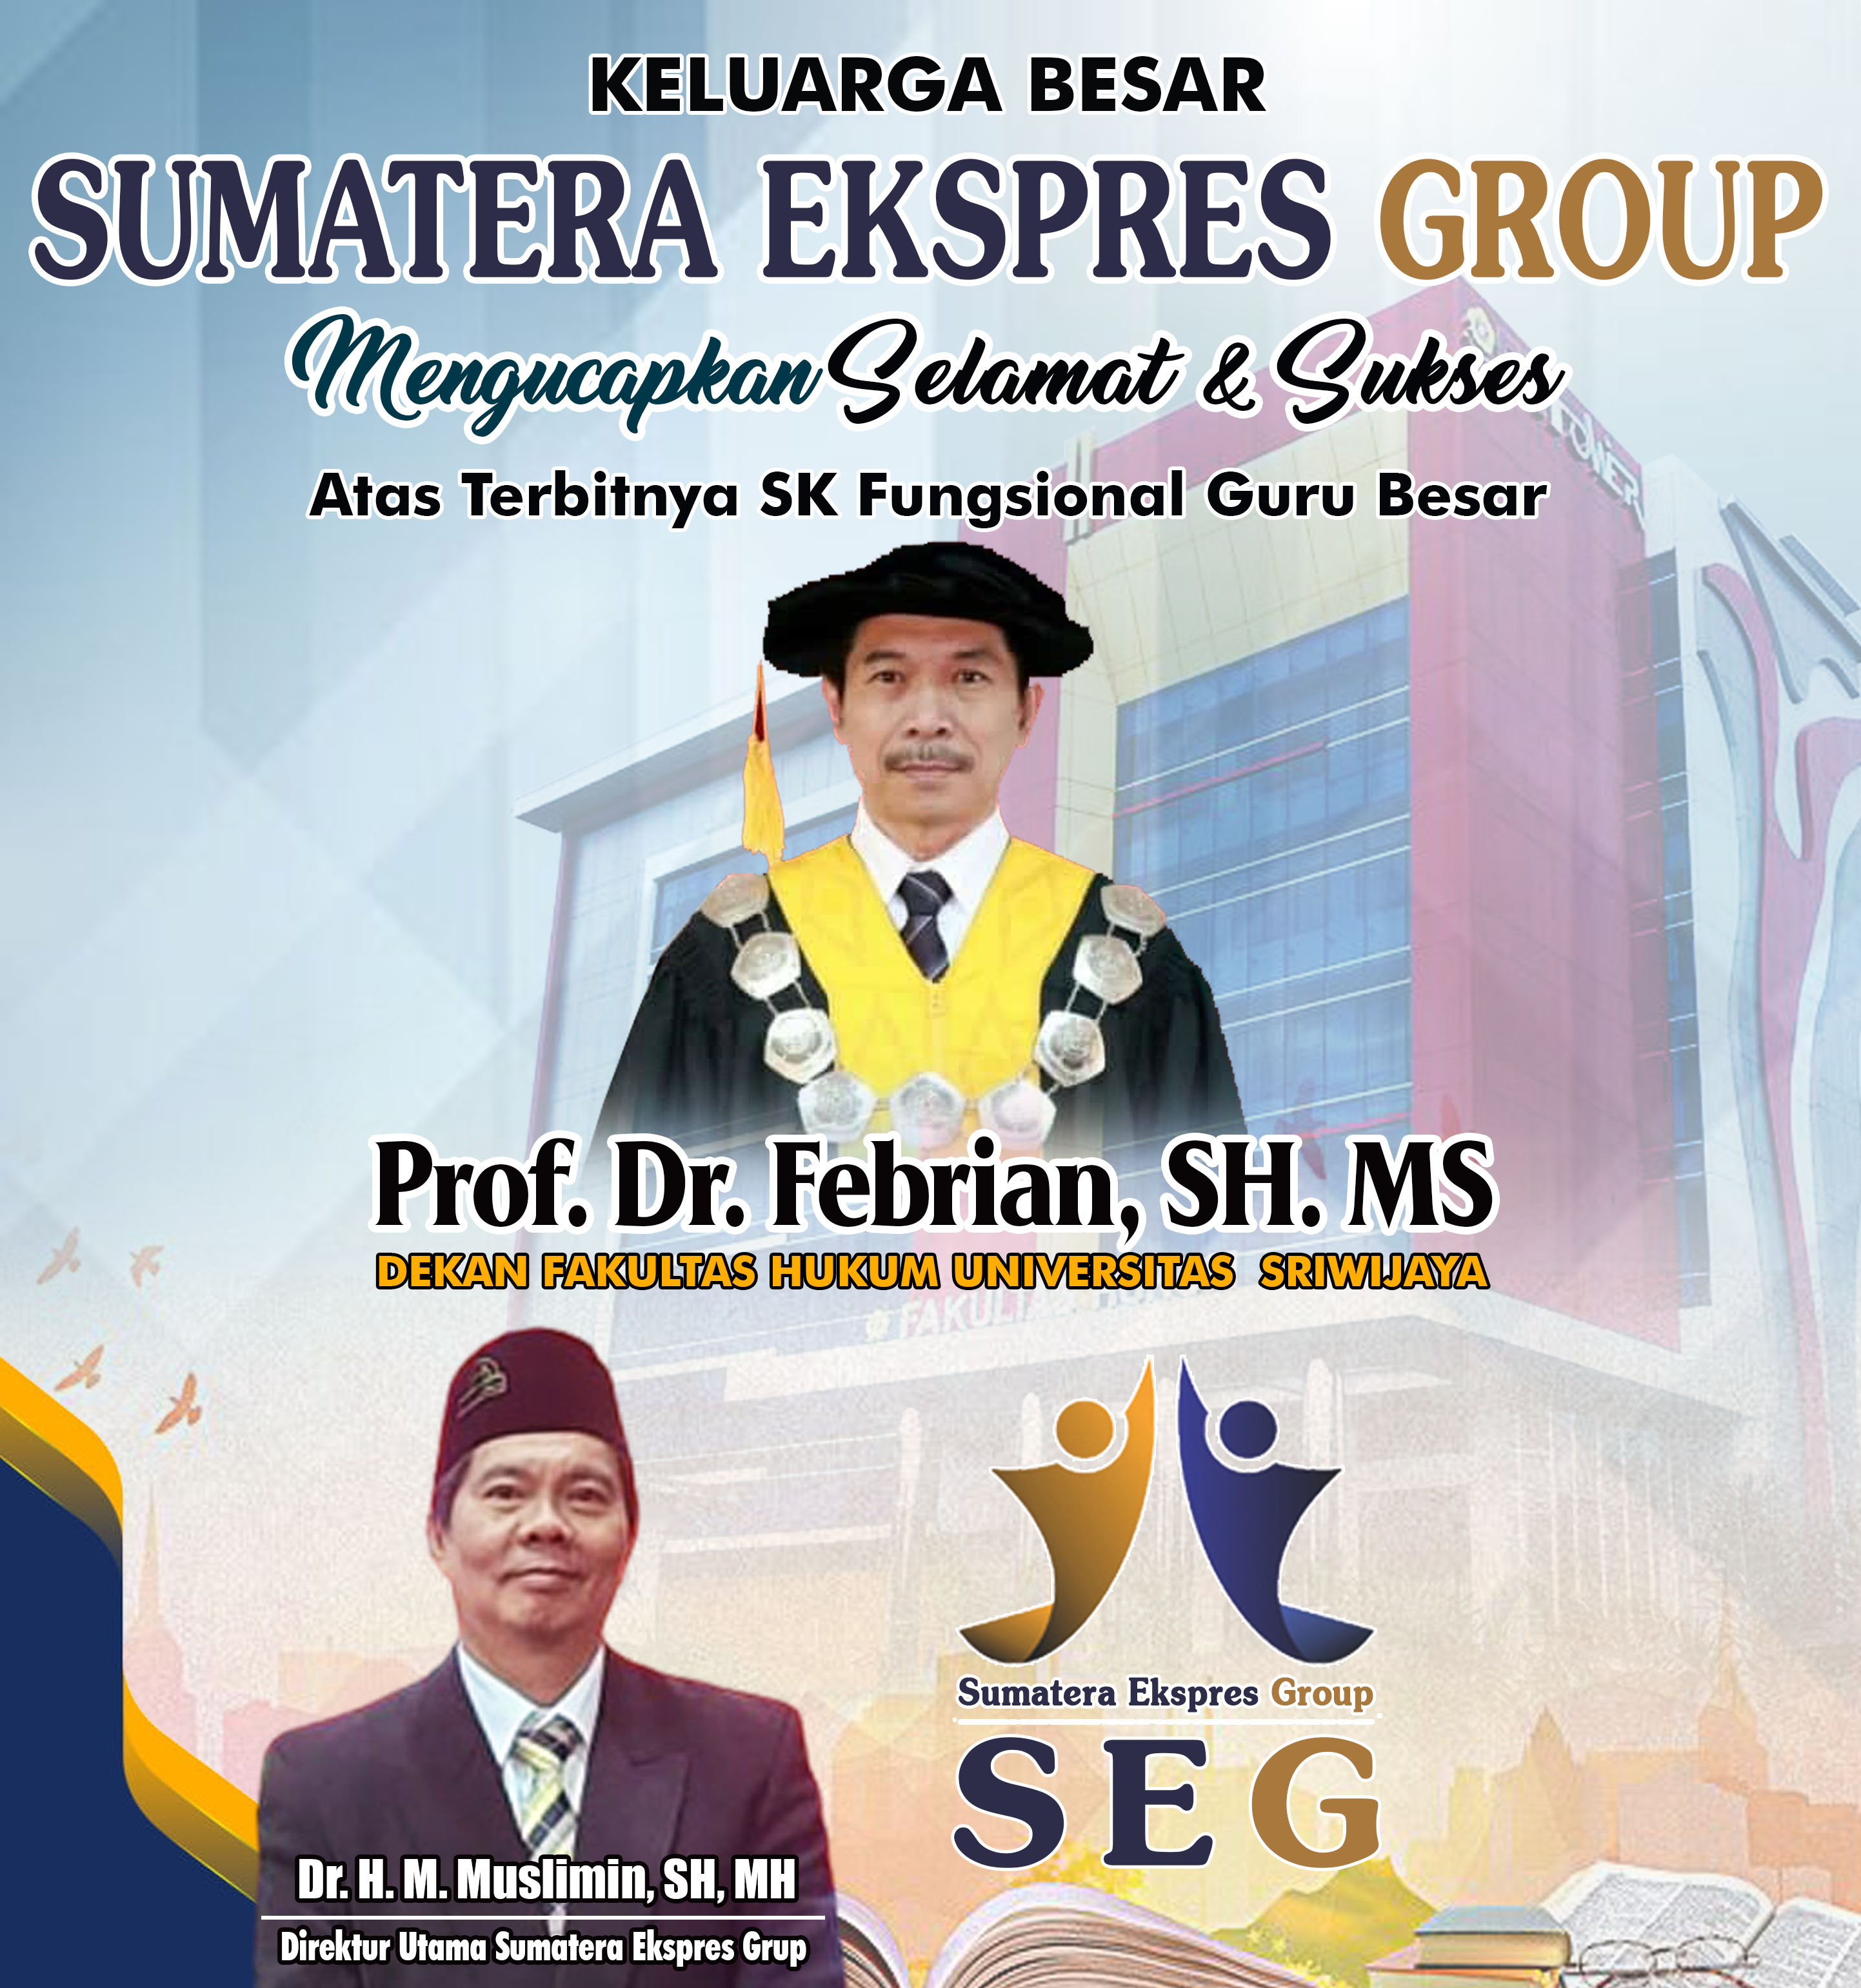 Selamat dan Sukses atas Terbitnya SK Fungsional Guru Besar Prof Dr Febrian SH MS Dekan FH UNSRI